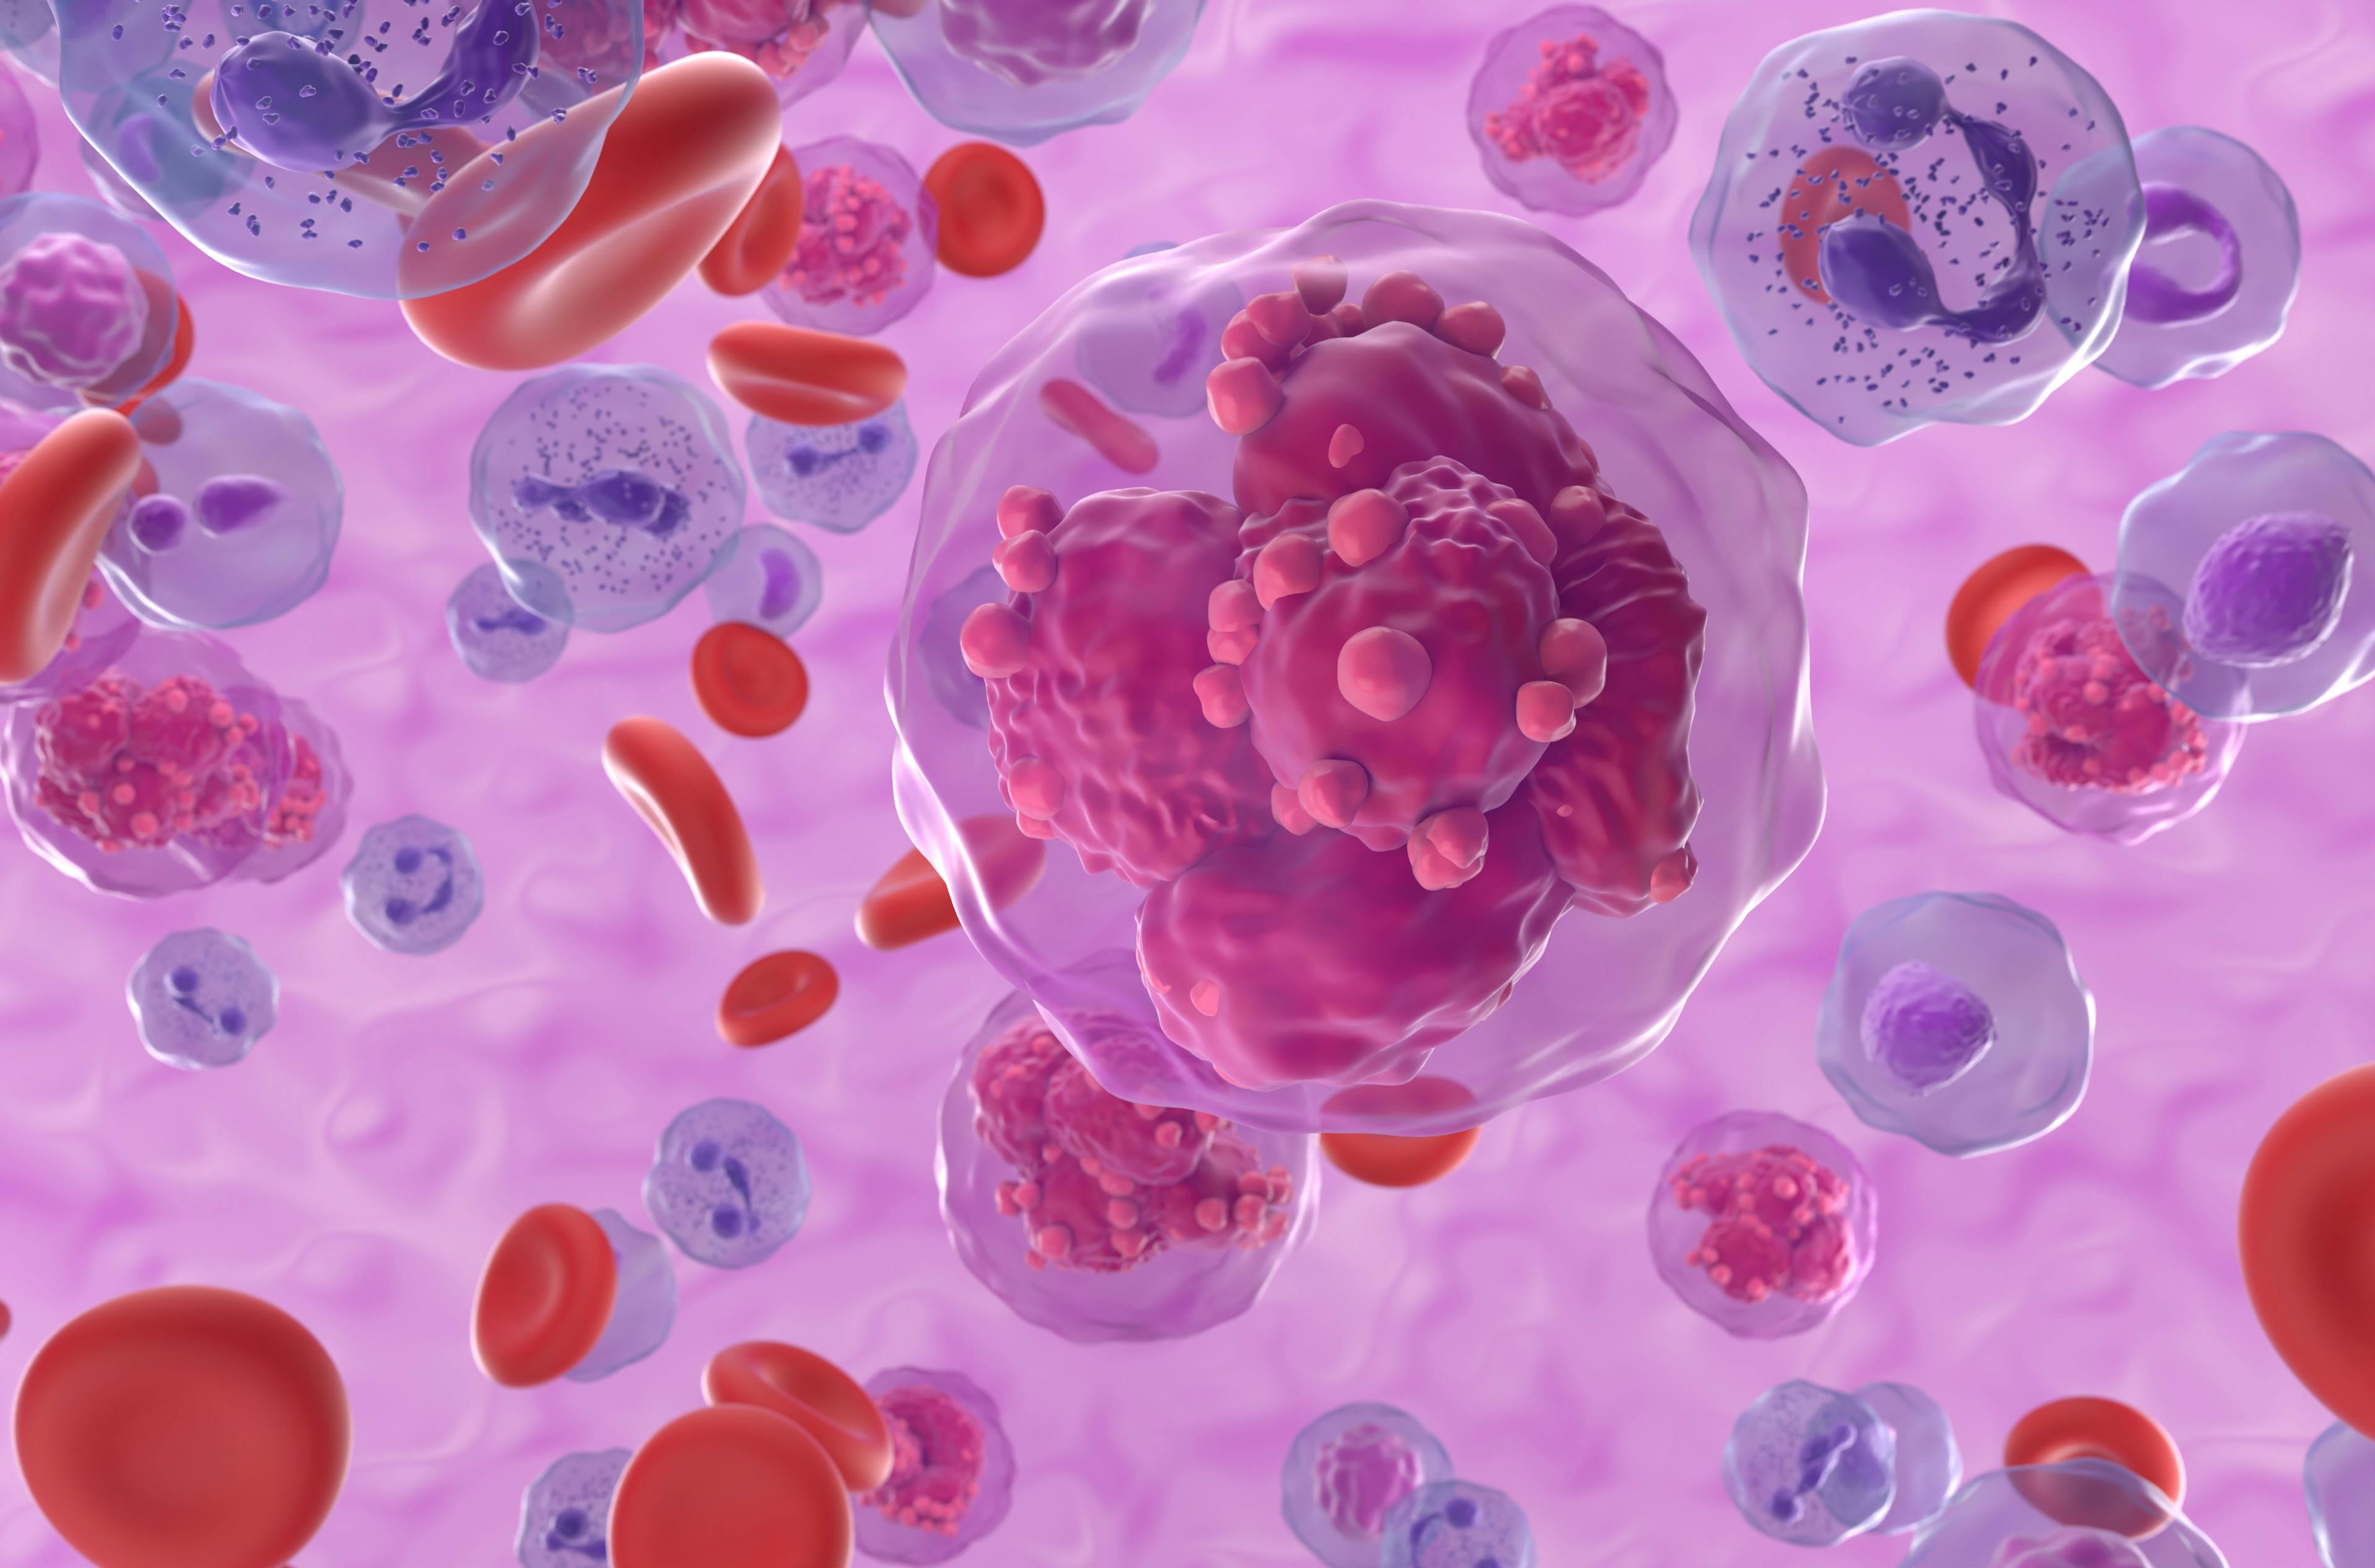 Acute lymphoblastic leukemia (ALL) cancer cells in the blood flow -- Image credit: LASZLO | stock.adobe.com